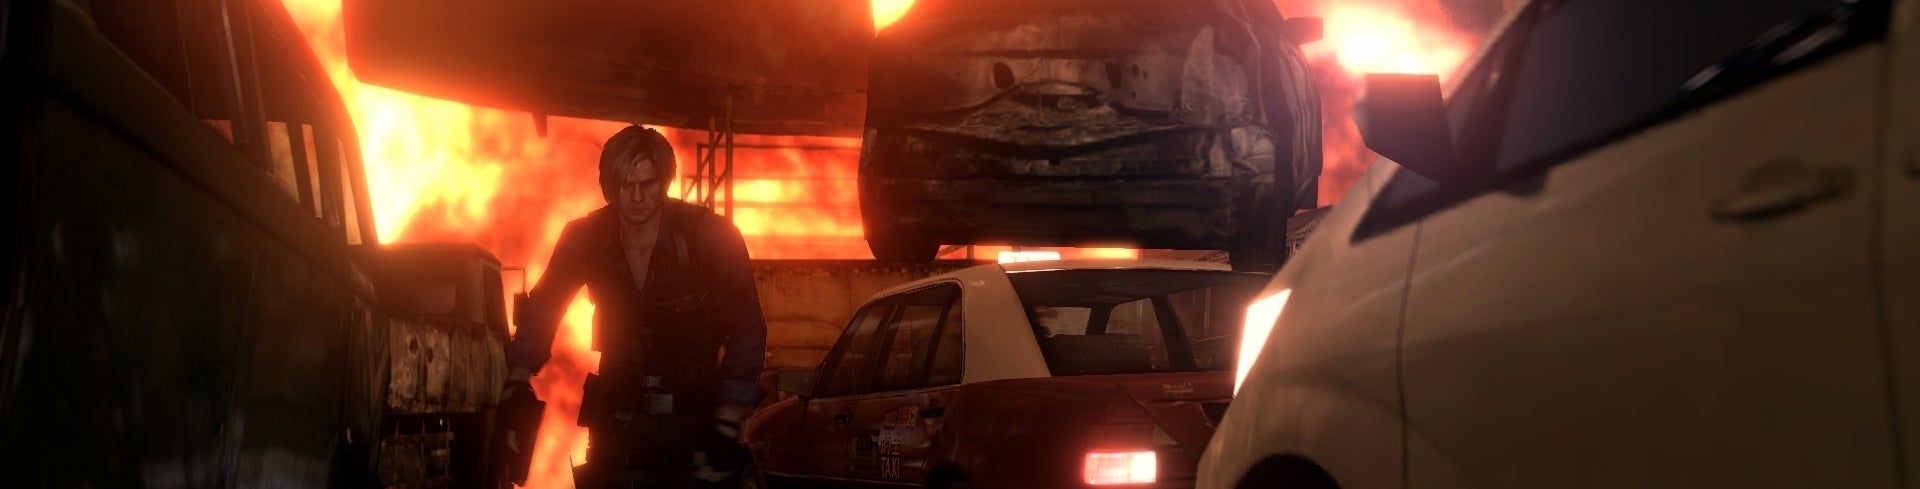 Obrazki dla Resident Evil 6 - Recenzja